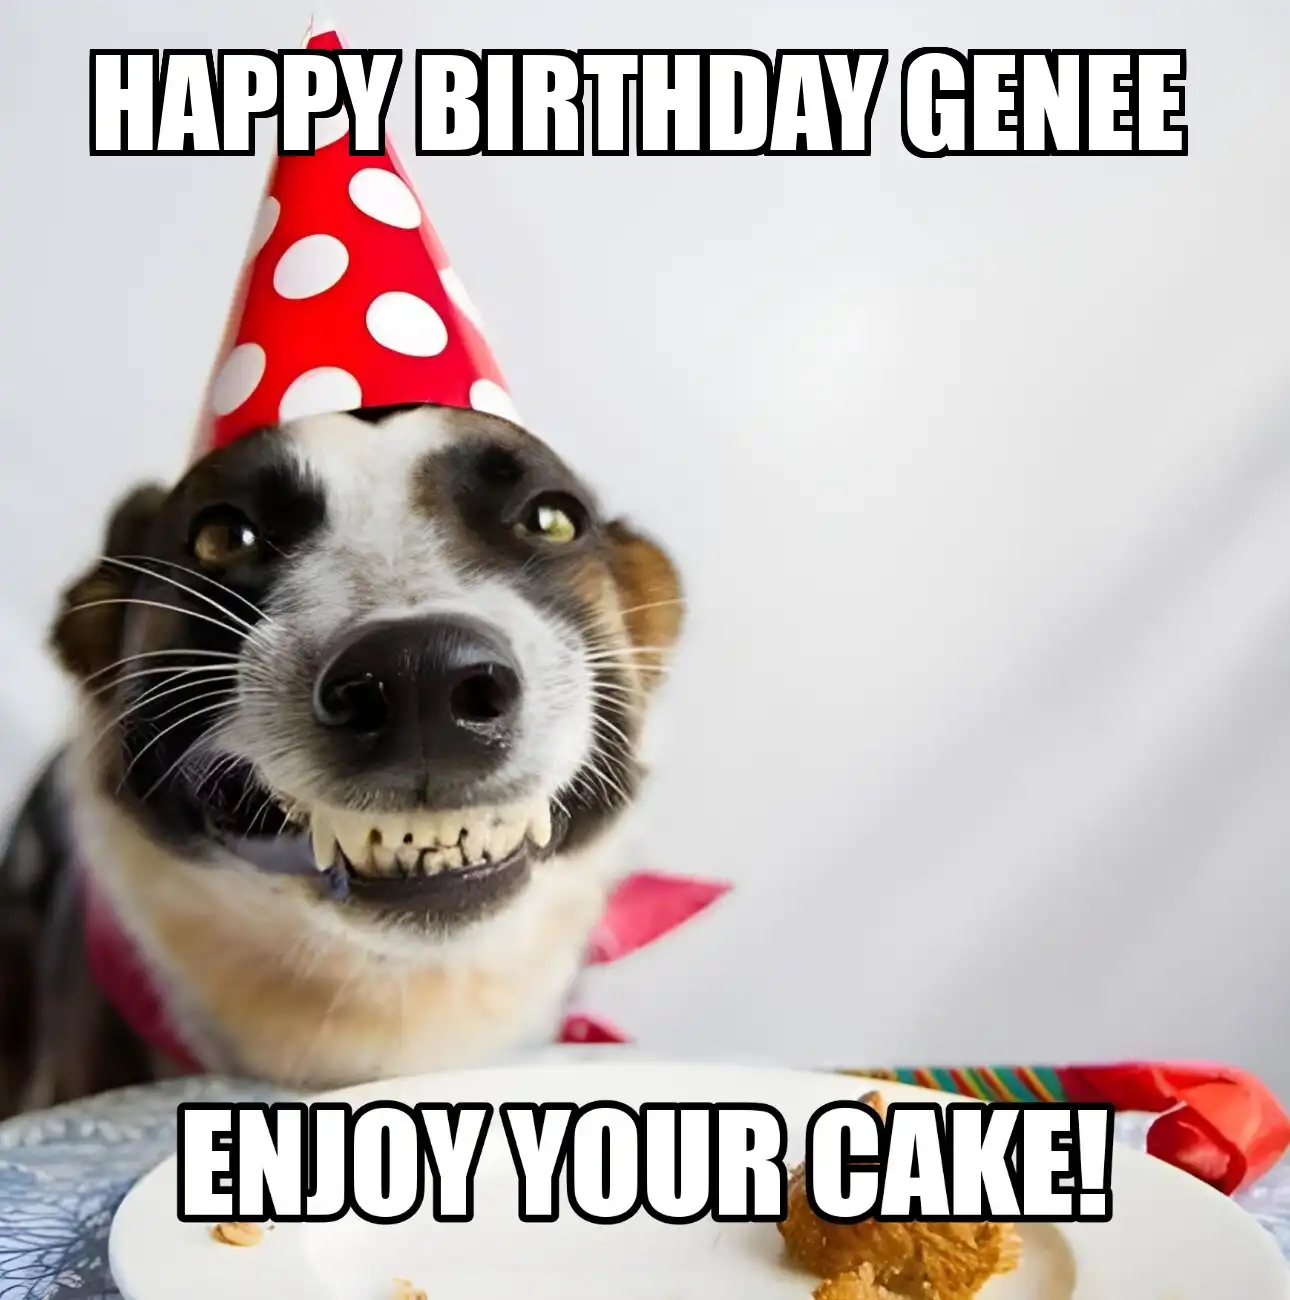 Happy Birthday Genee Enjoy Your Cake Dog Meme